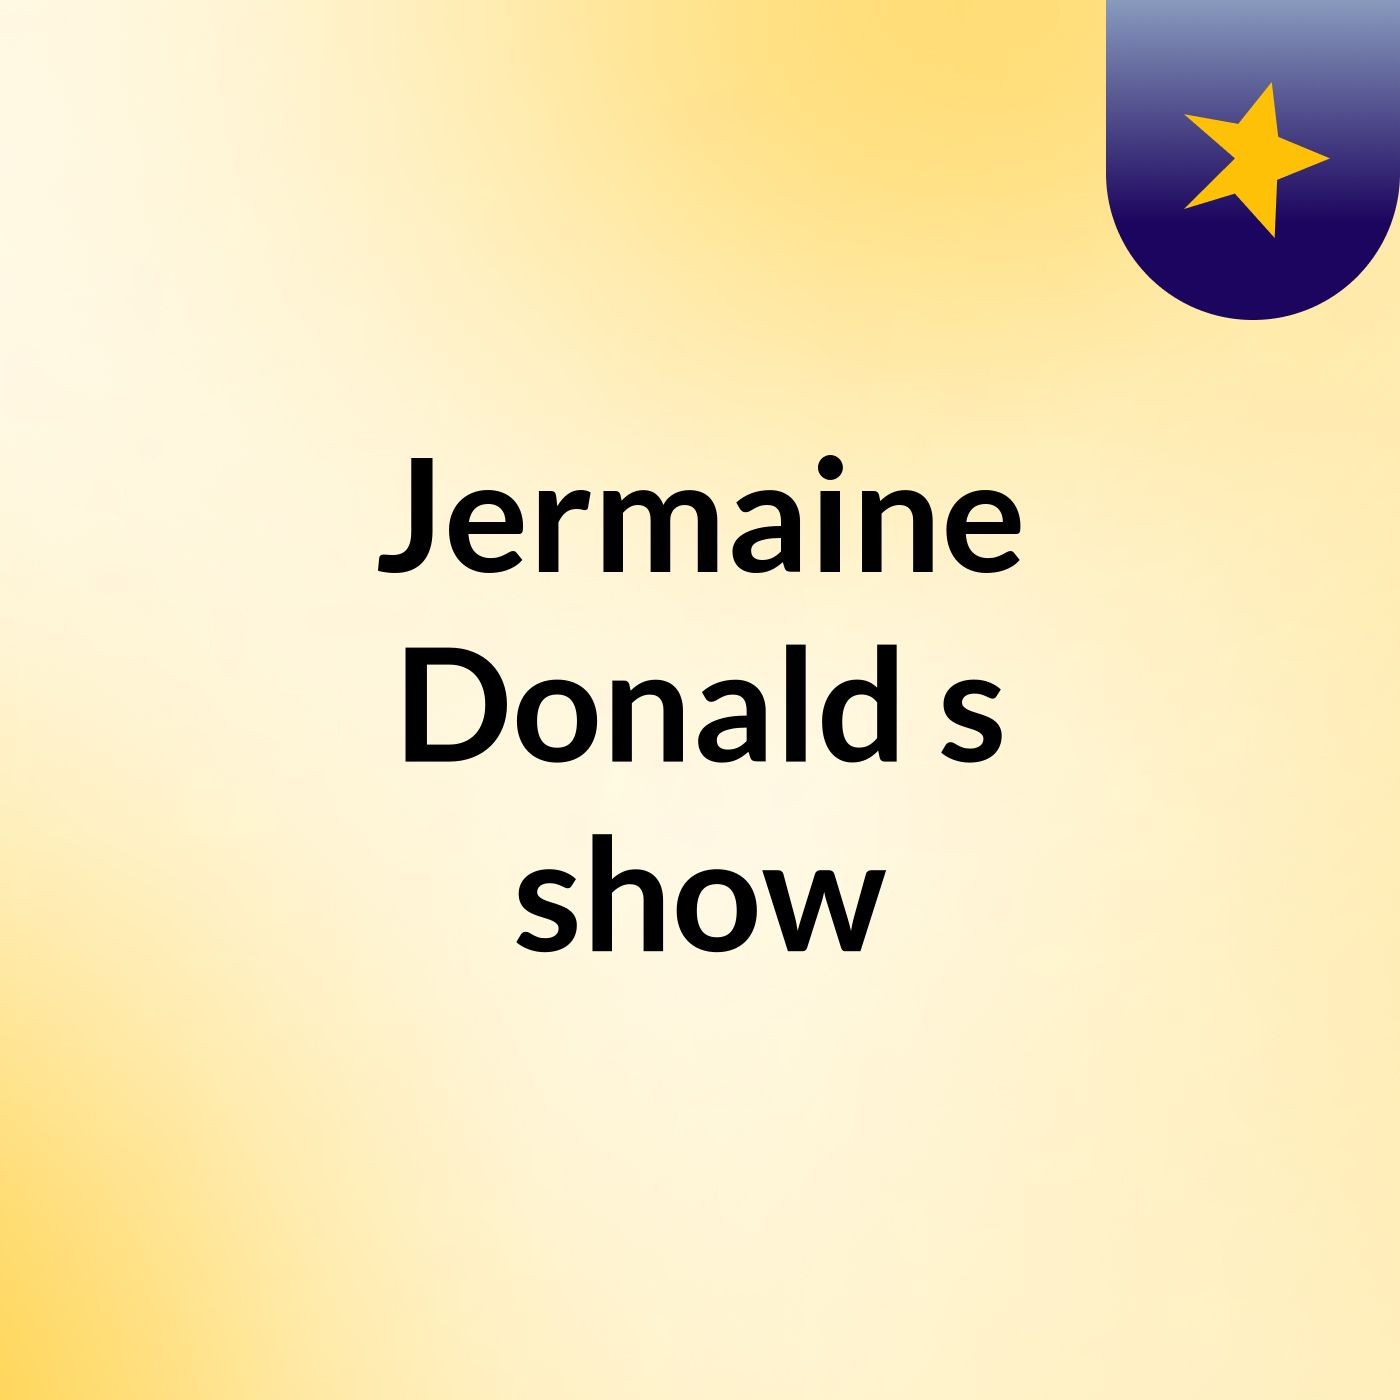 Jermaine Donald's show